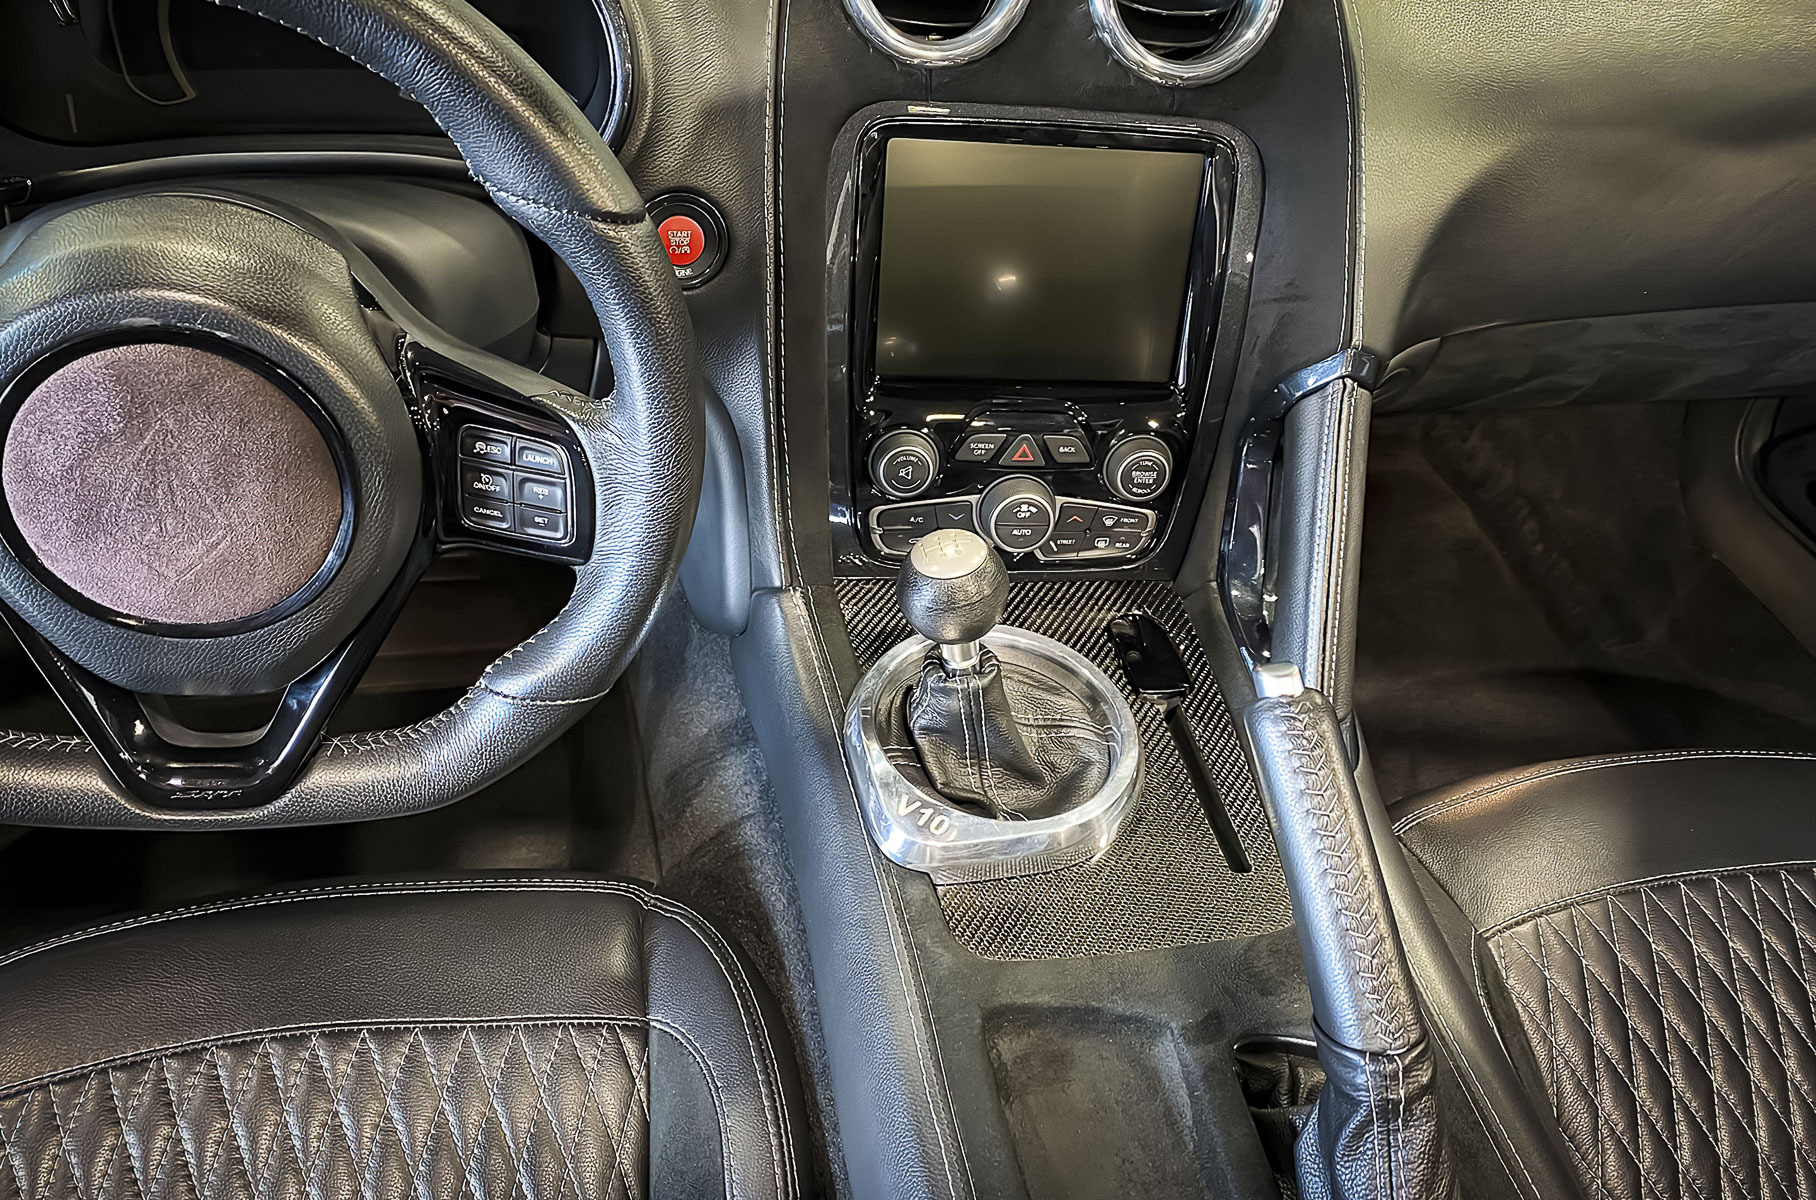 Единственный в мире родстер Force 1 на базе Dodge Viper пустят с молотка за 26,5 миллионов рублей